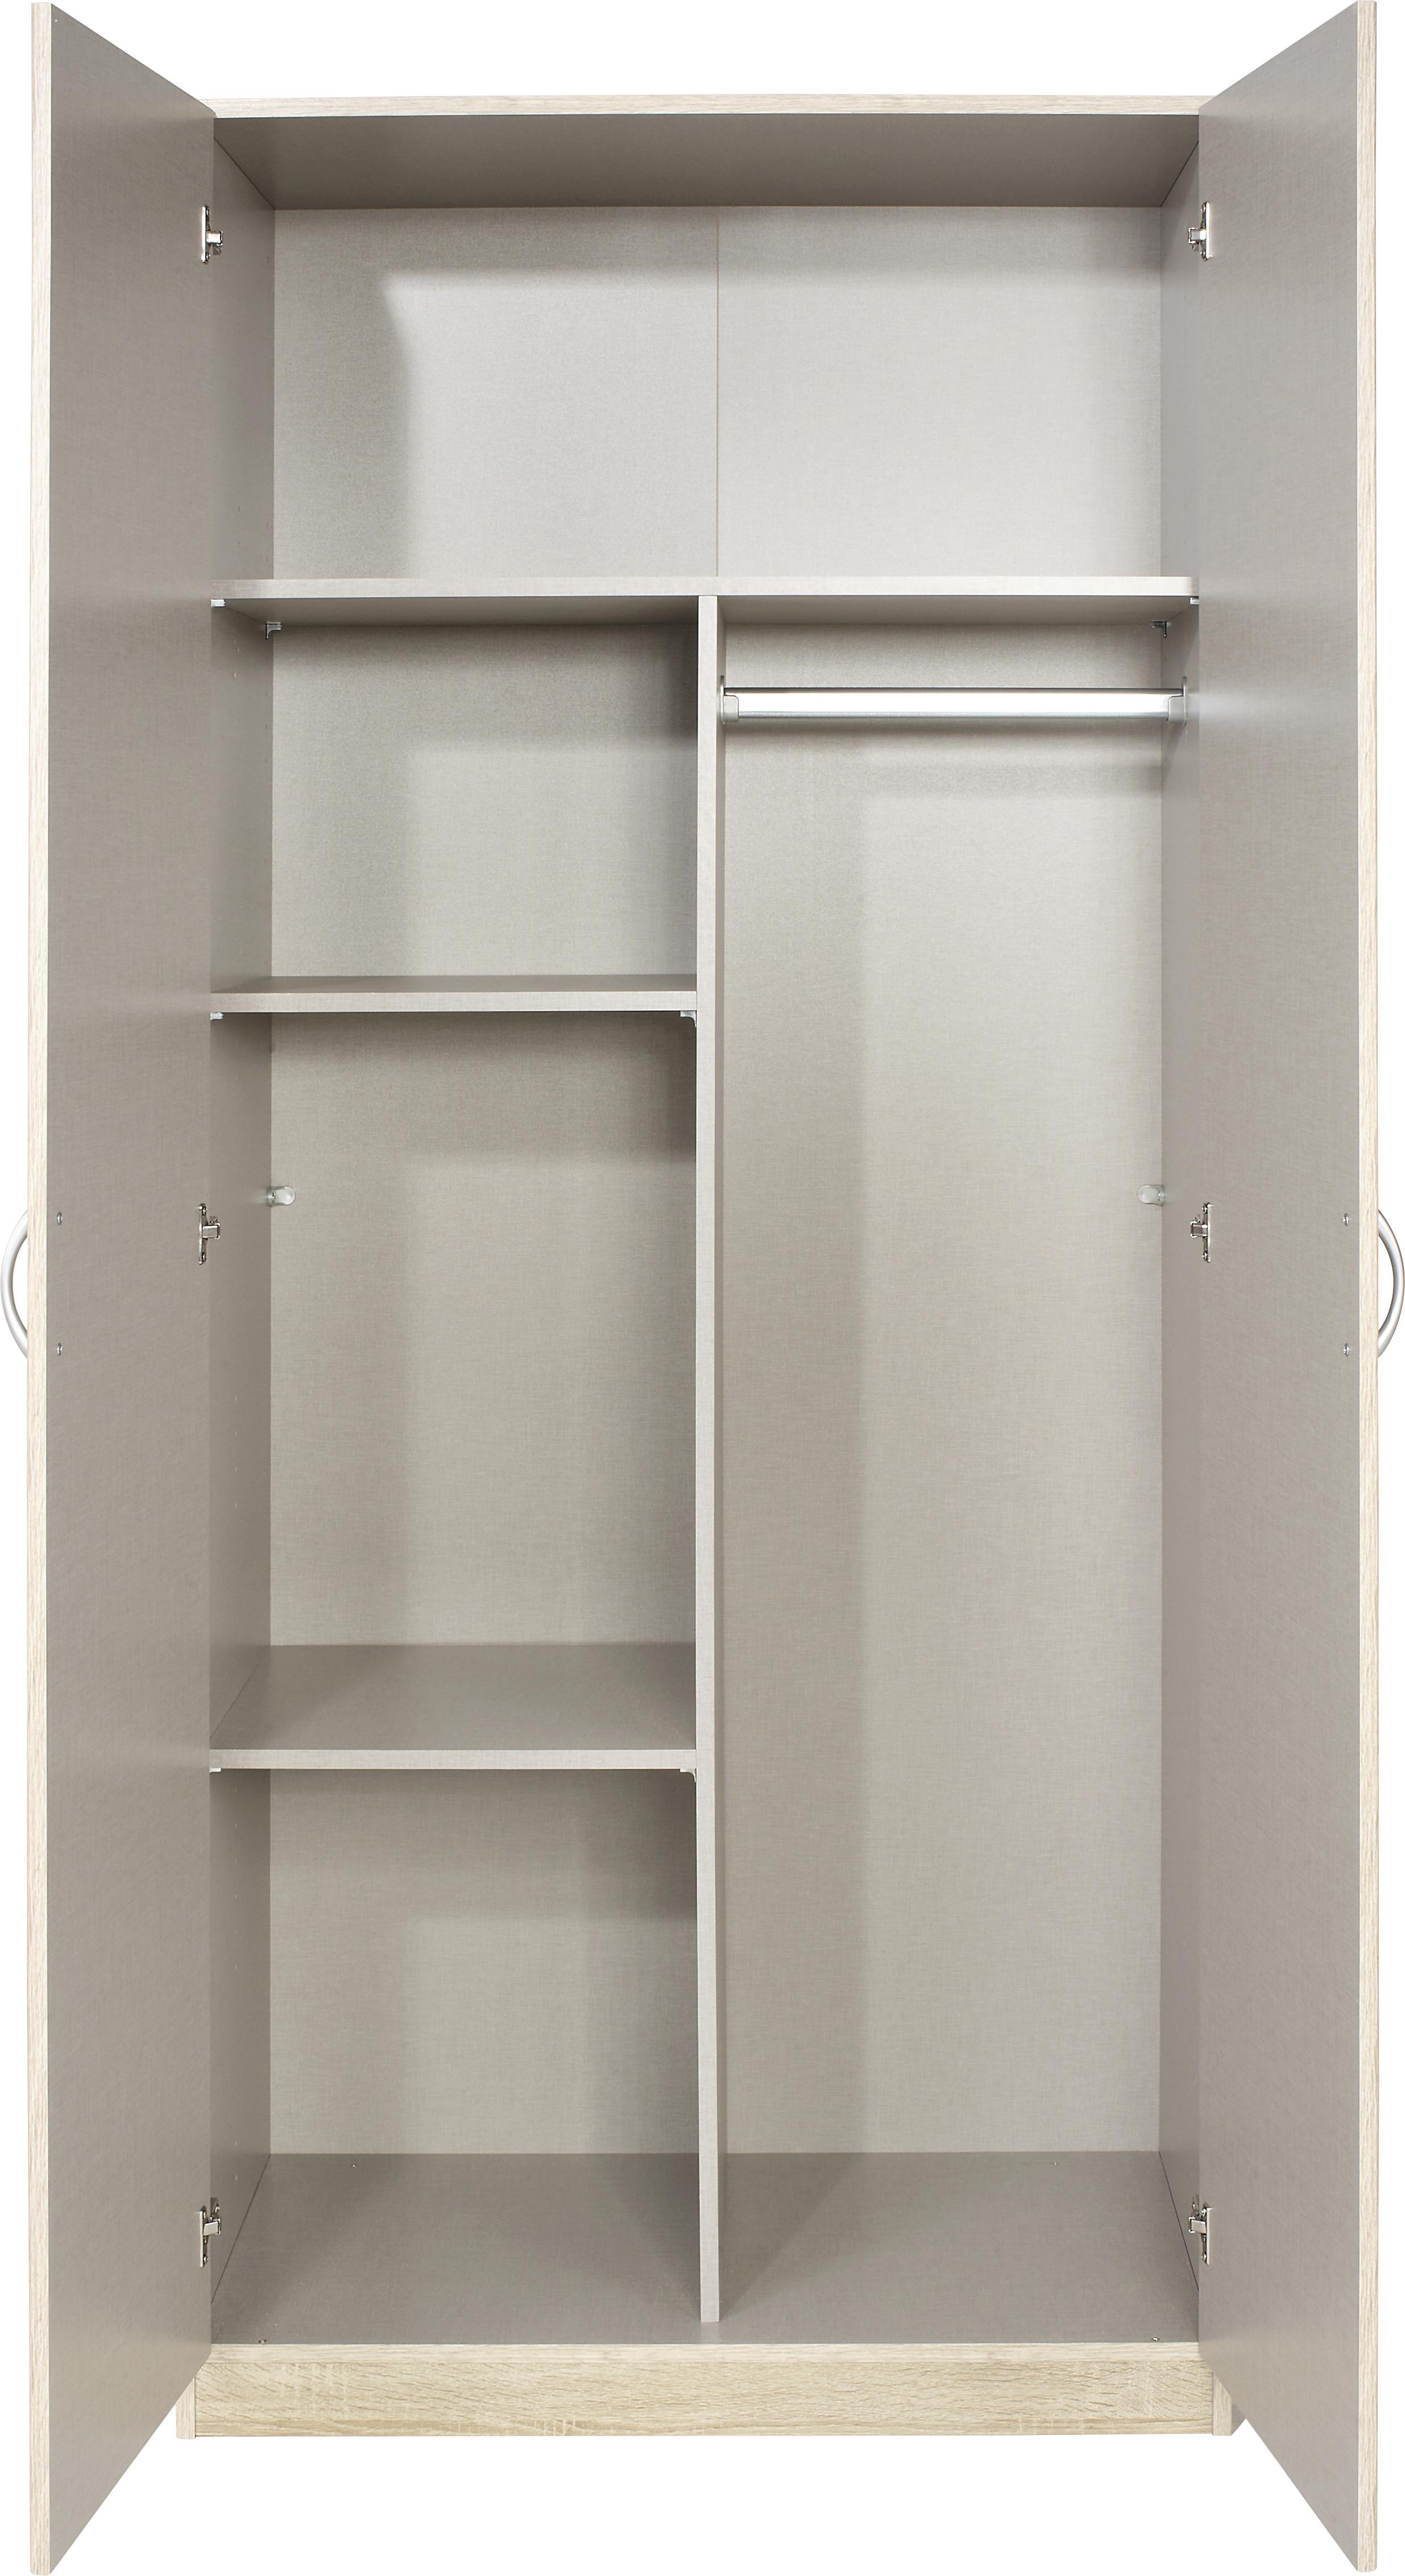 Dulap cu uși rotative Karo - alb, Konventionell, material pe bază de lemn (91/197/54cm)